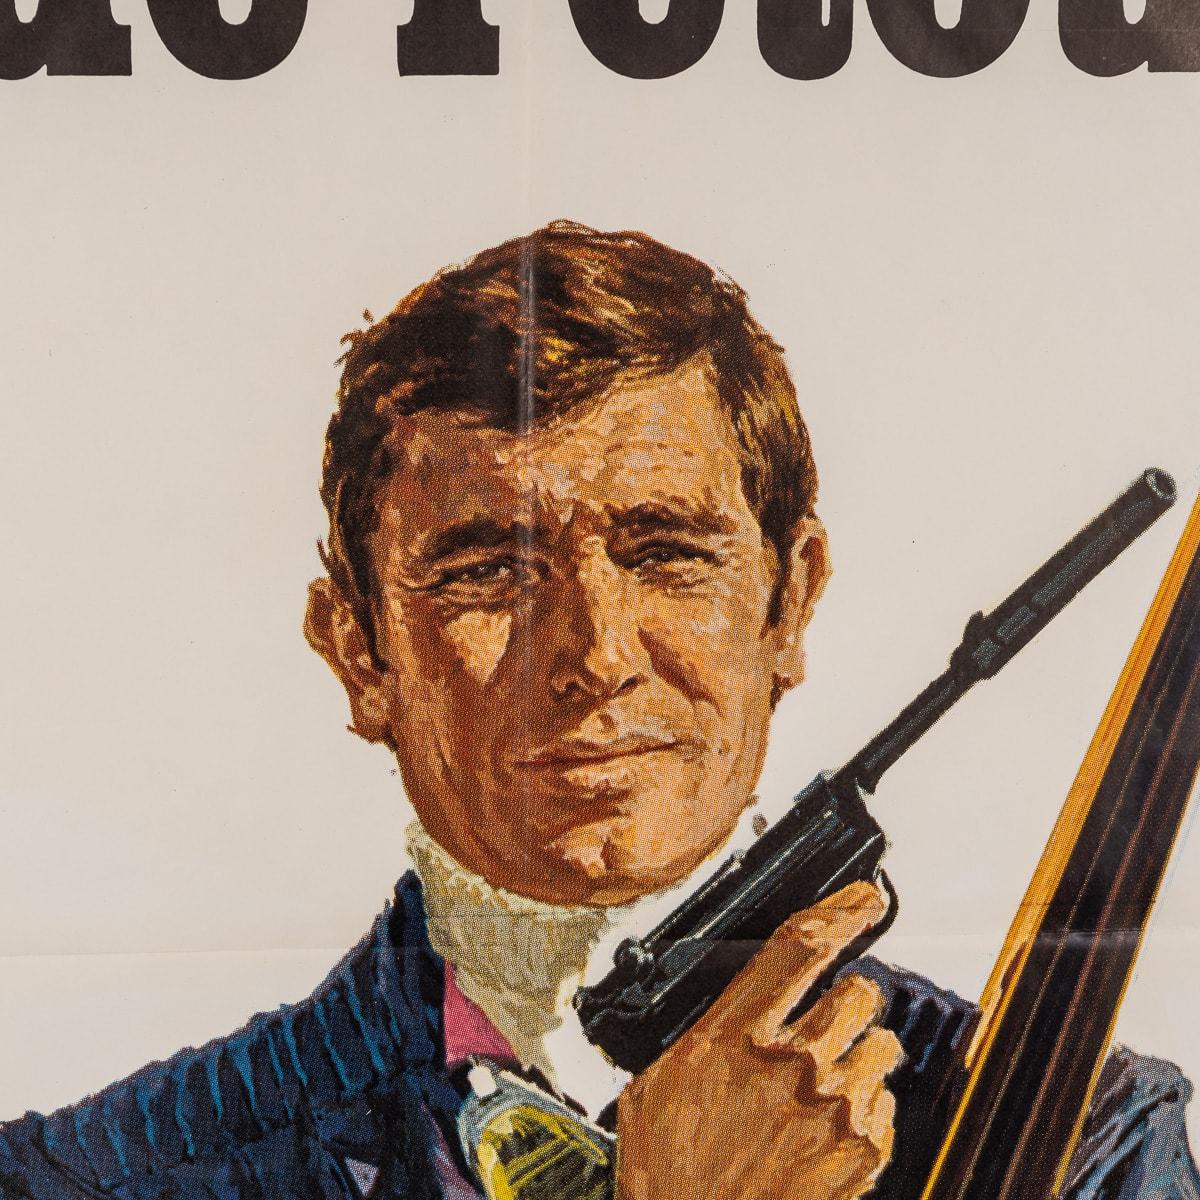 Original French Release James Bond On Her Majesty's Secret Service Poster c.1969 4